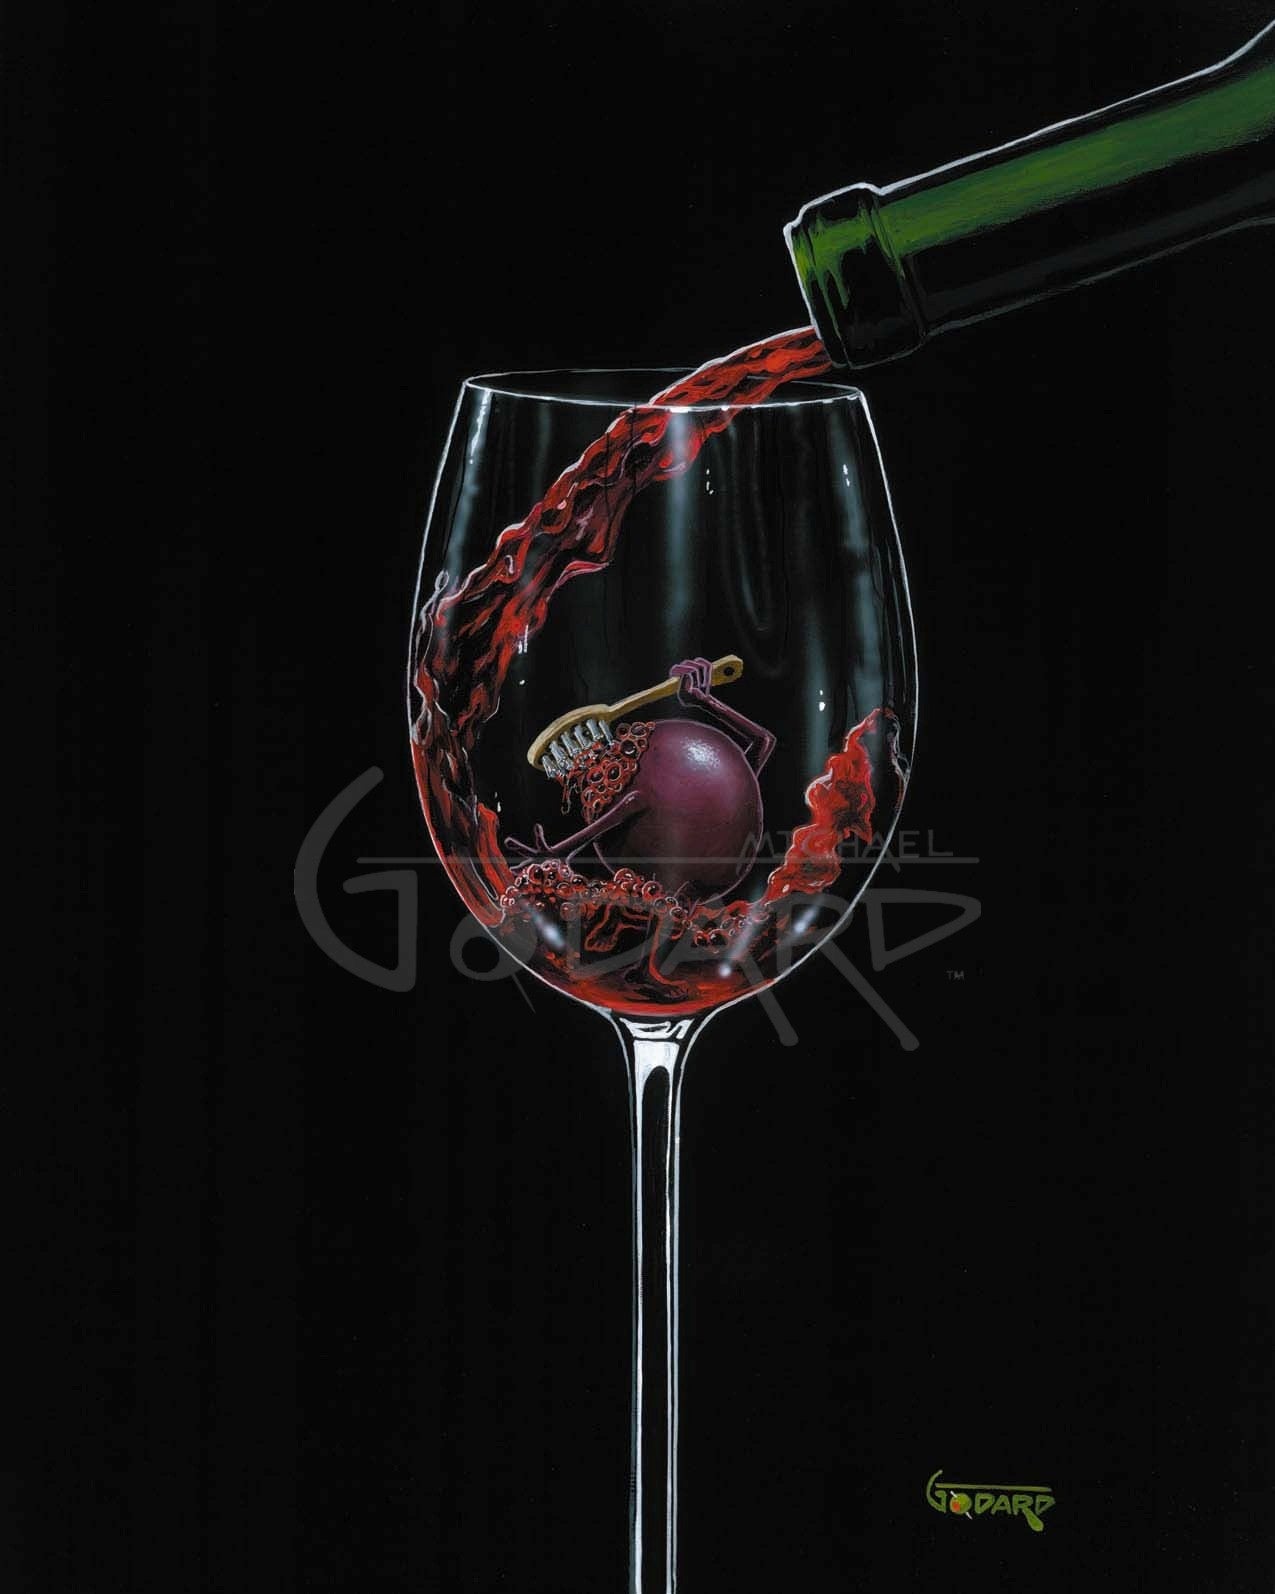 Michael Godard "Grape Bath" Limited Edition Canvas Giclee